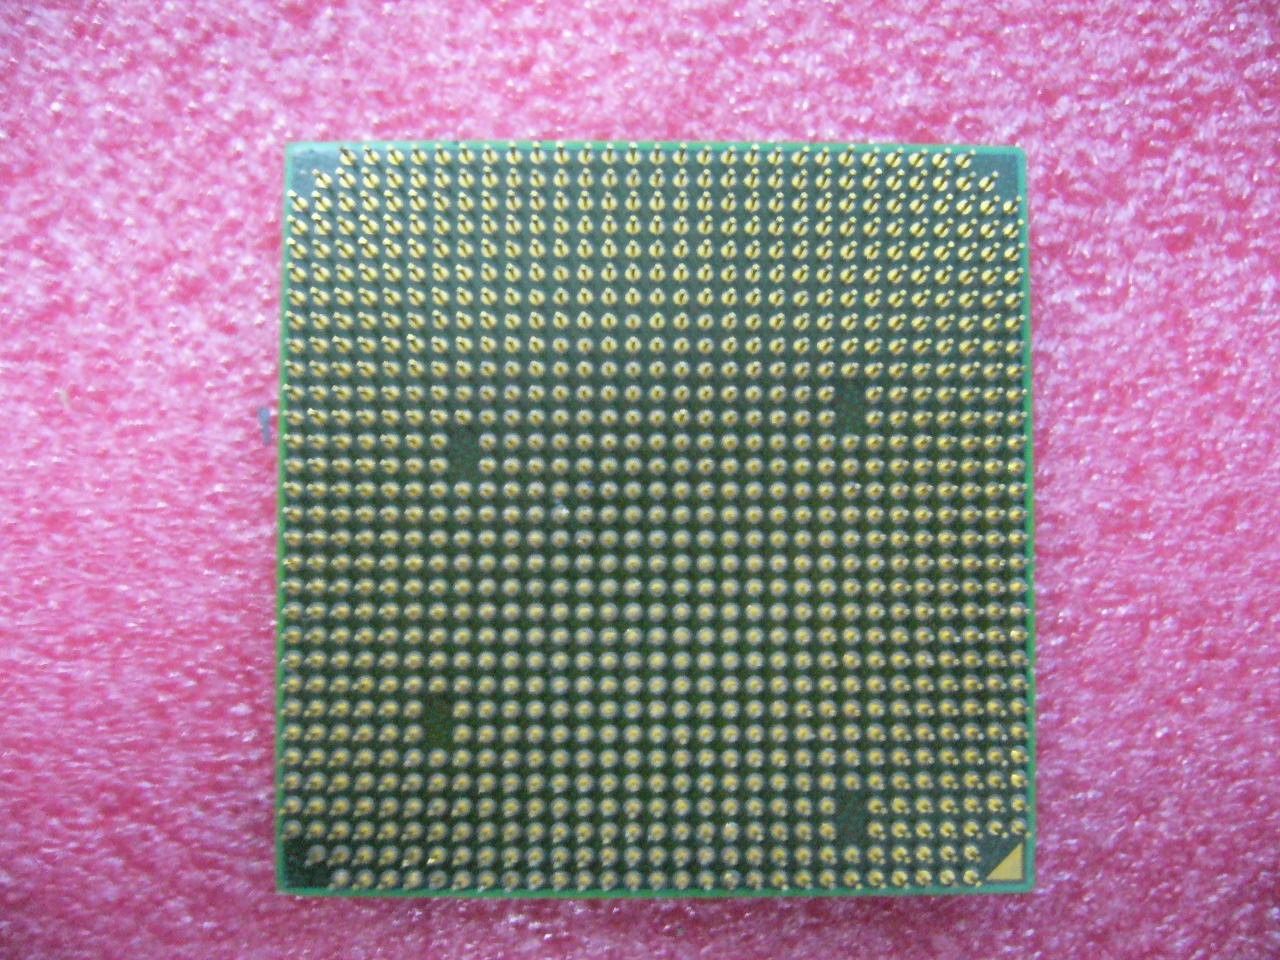 QTY 1x AMD Athlon 64 X2 5600+ 2.9 GHz Dual-Core (ADO5600IAA5DO) CPU Socket AM2 - zum Schließen ins Bild klicken